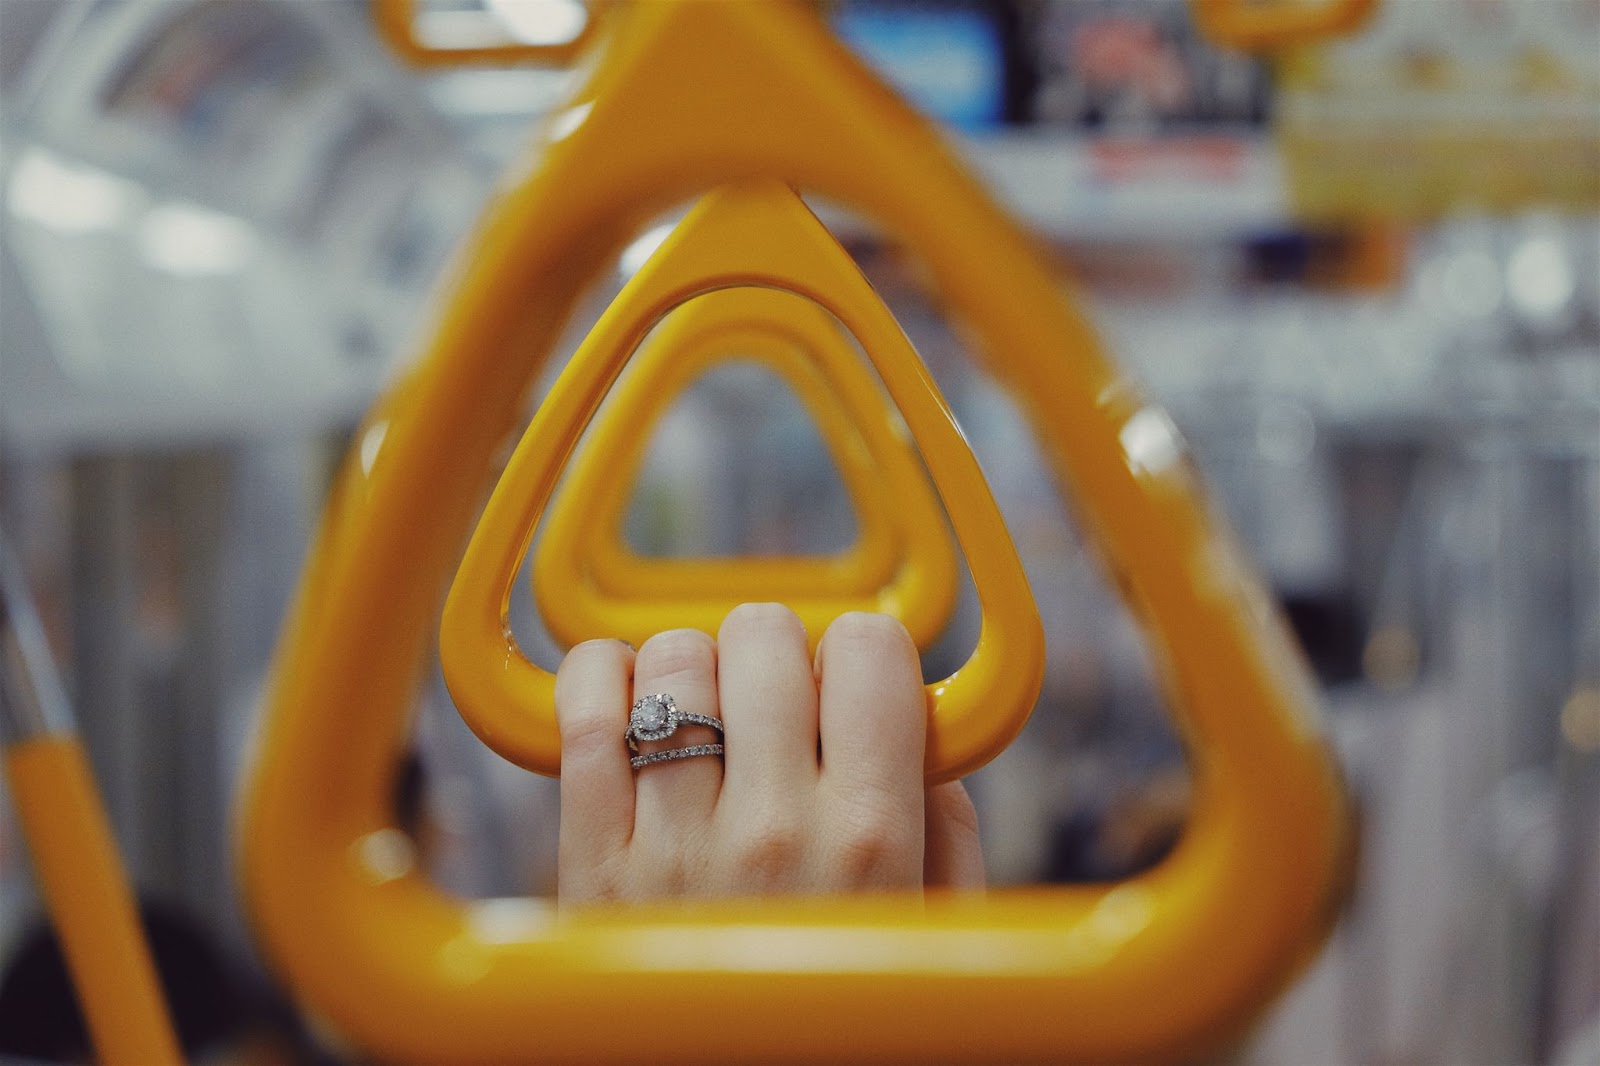 Engagement Ring Designers